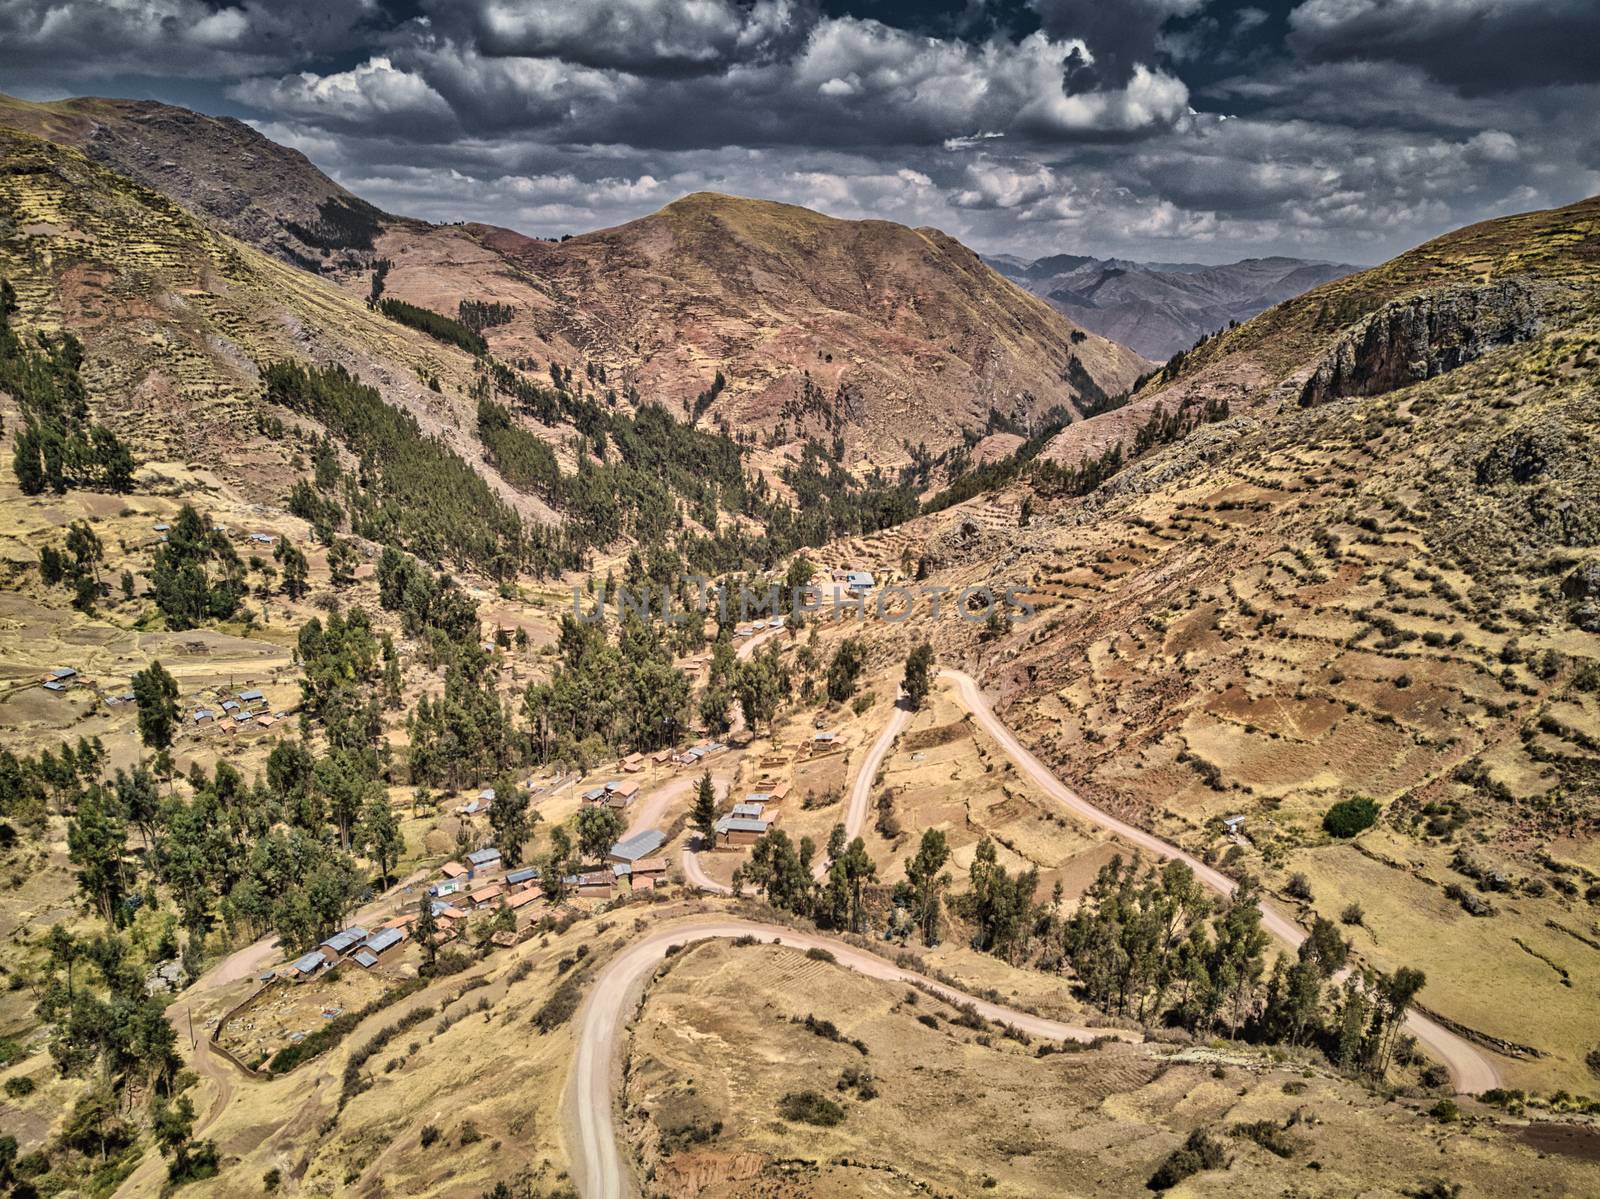 Mountain village in Peru by mevert